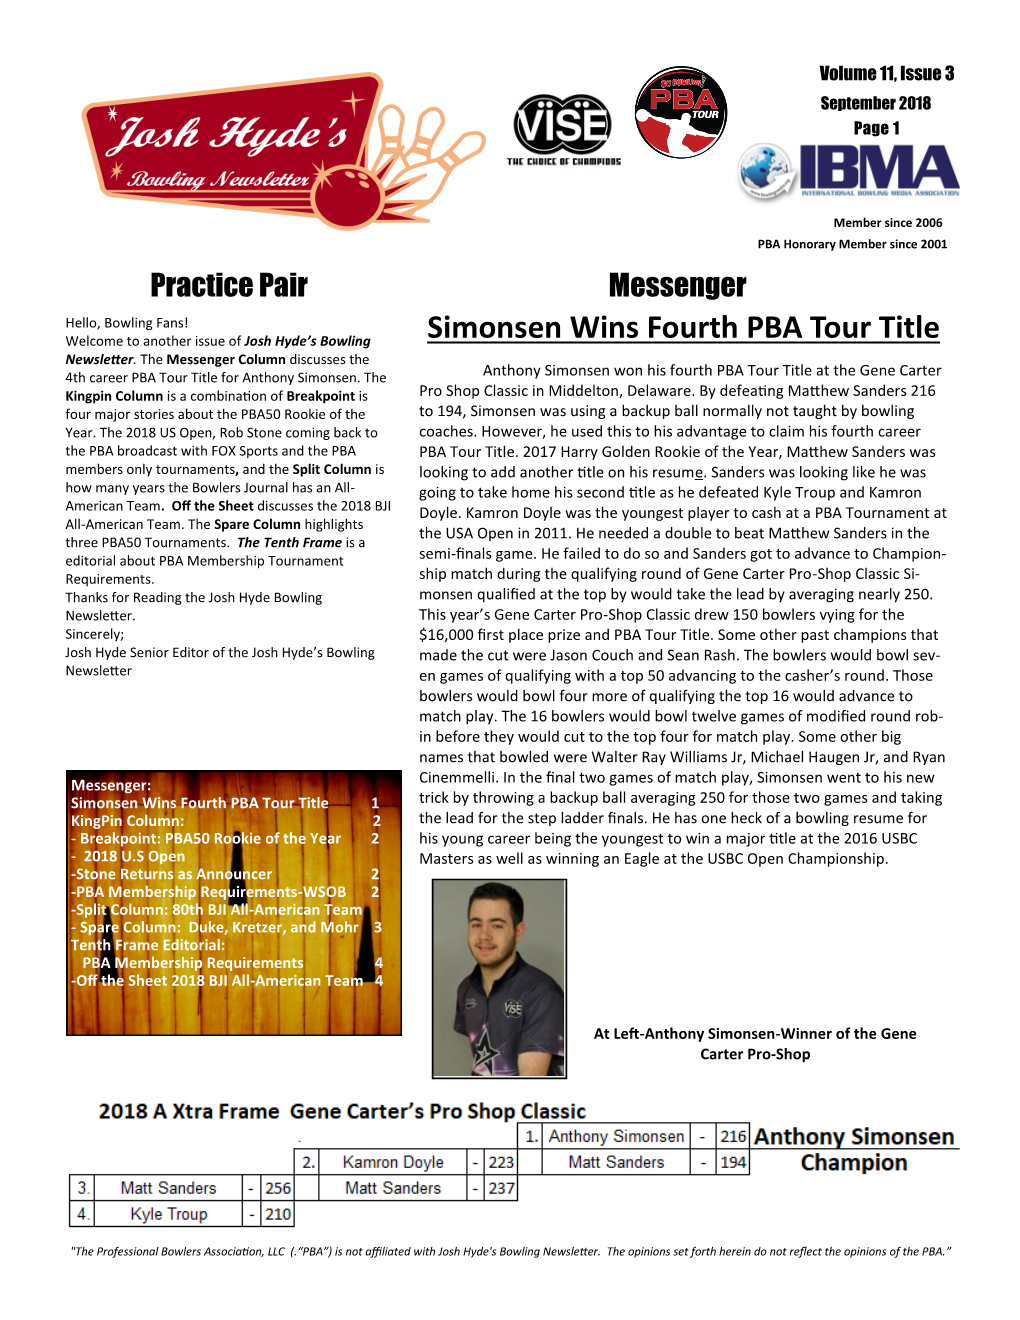 Simonsen Wins Fourth PBA Tour Title Newsletter